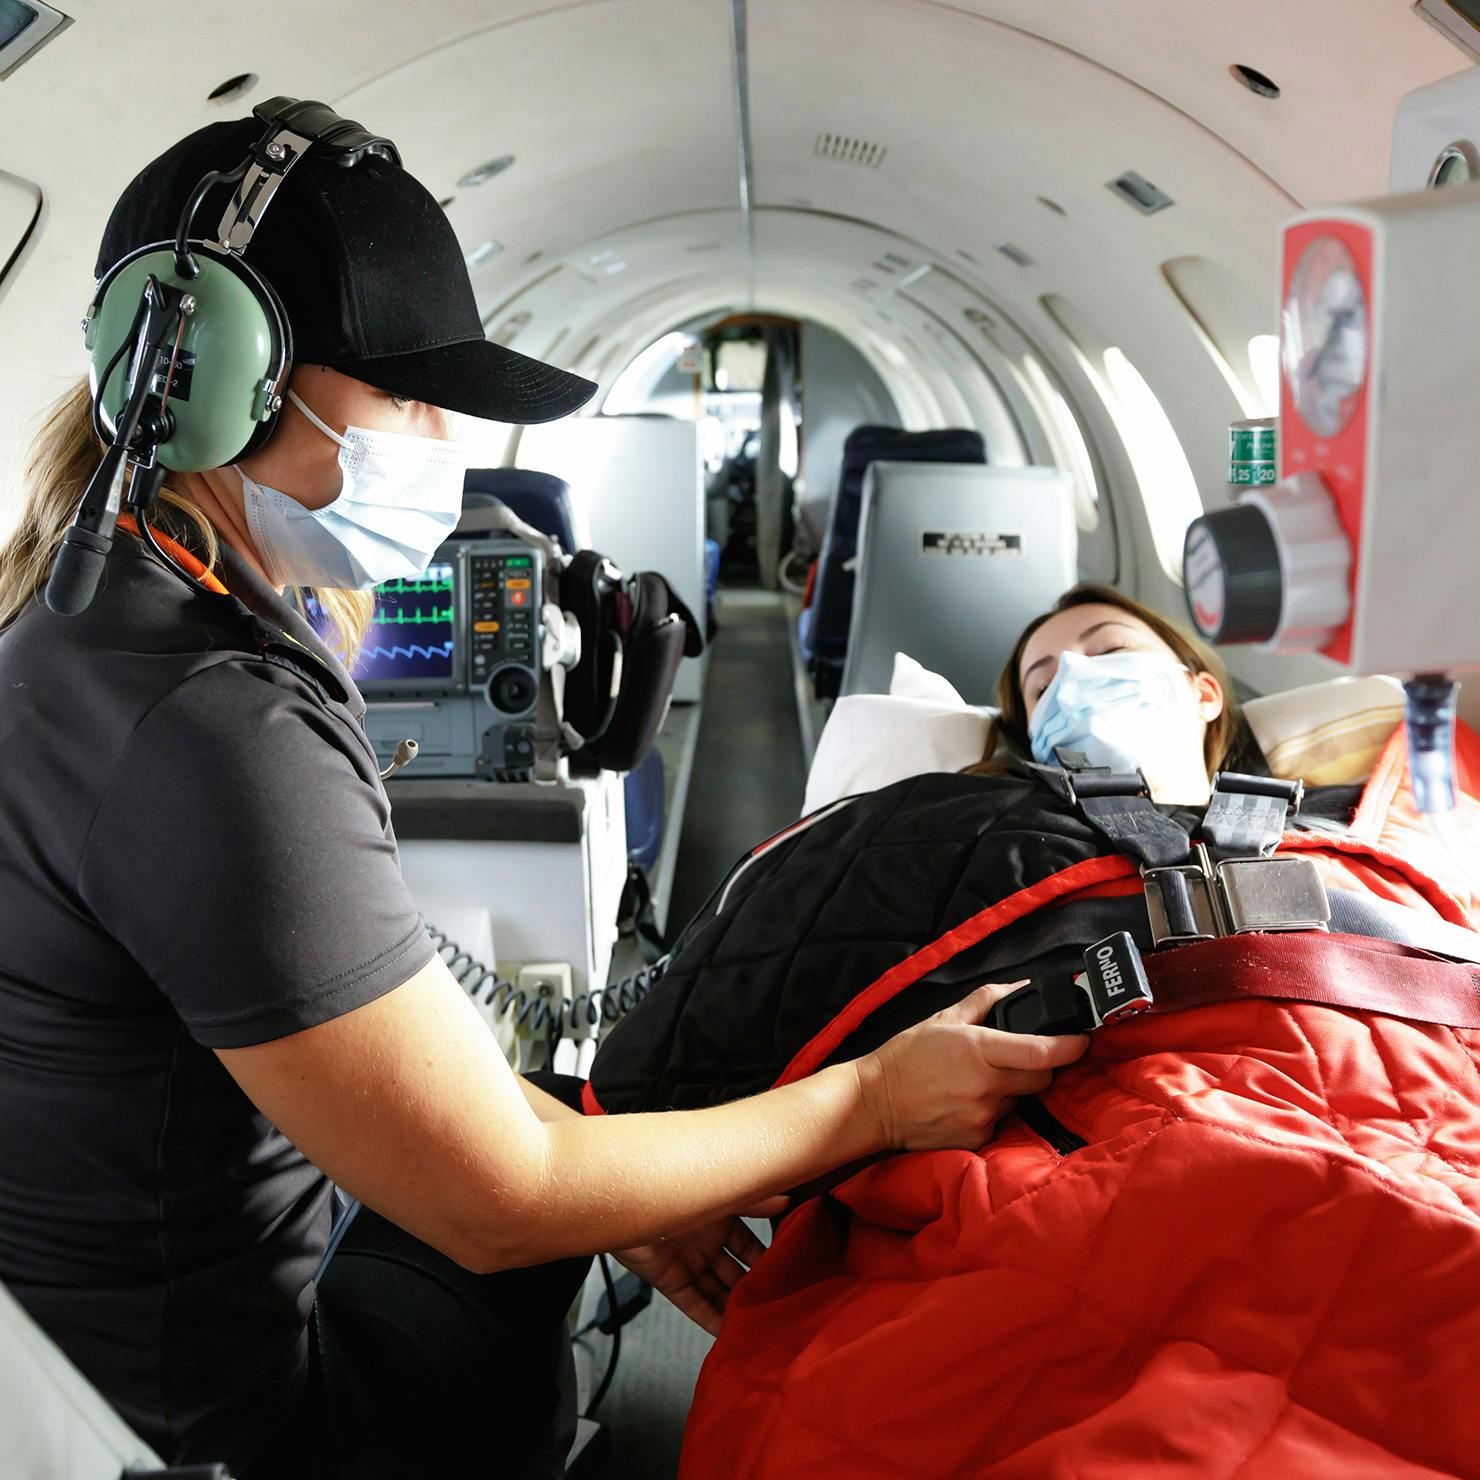 Medevac nurse securing patient inside airplane for take off.